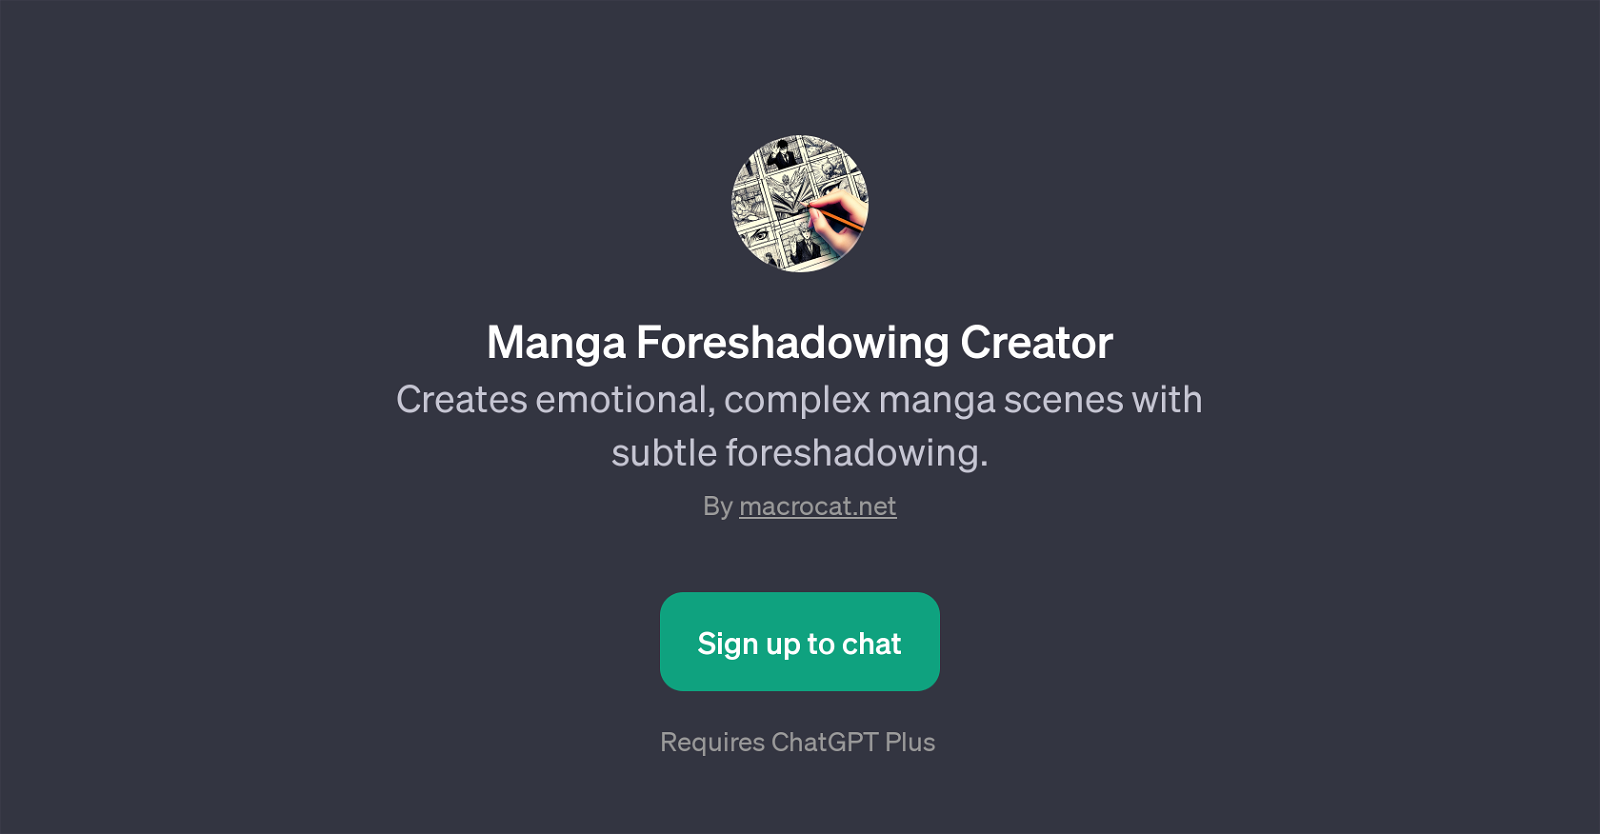 Manga Foreshadowing Creator website